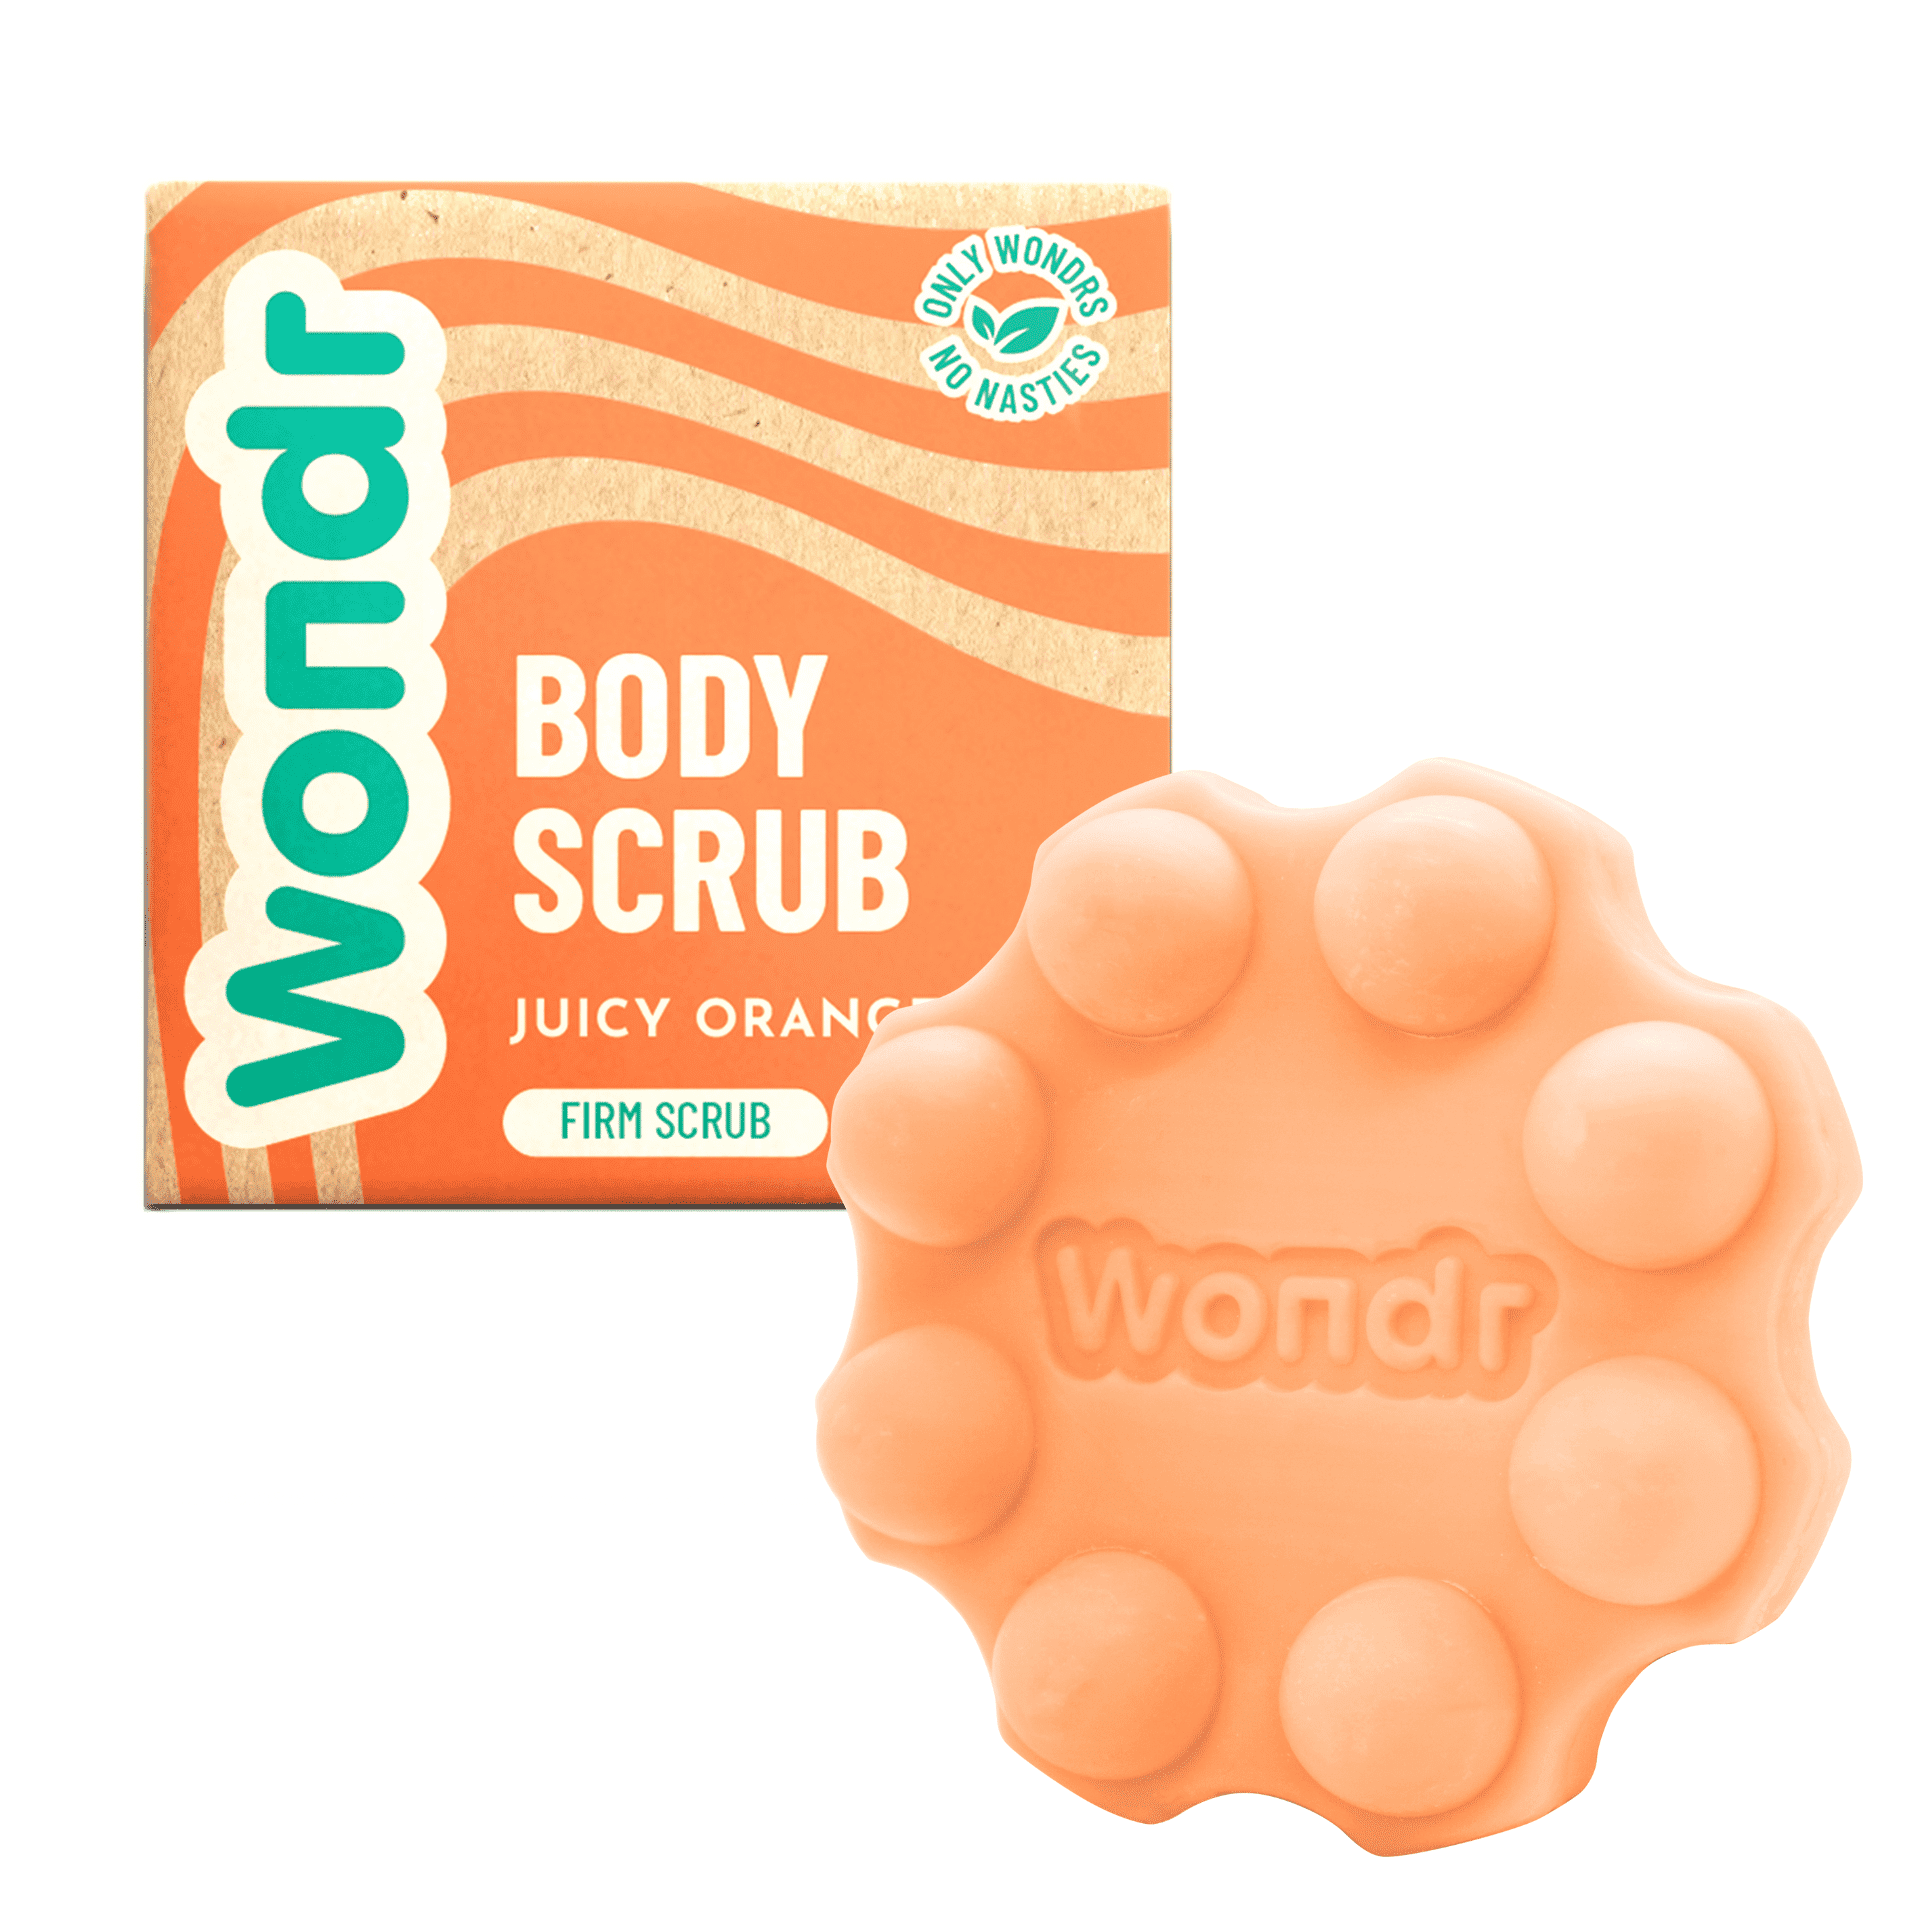 WONDR Body Scrub Juicy Orange